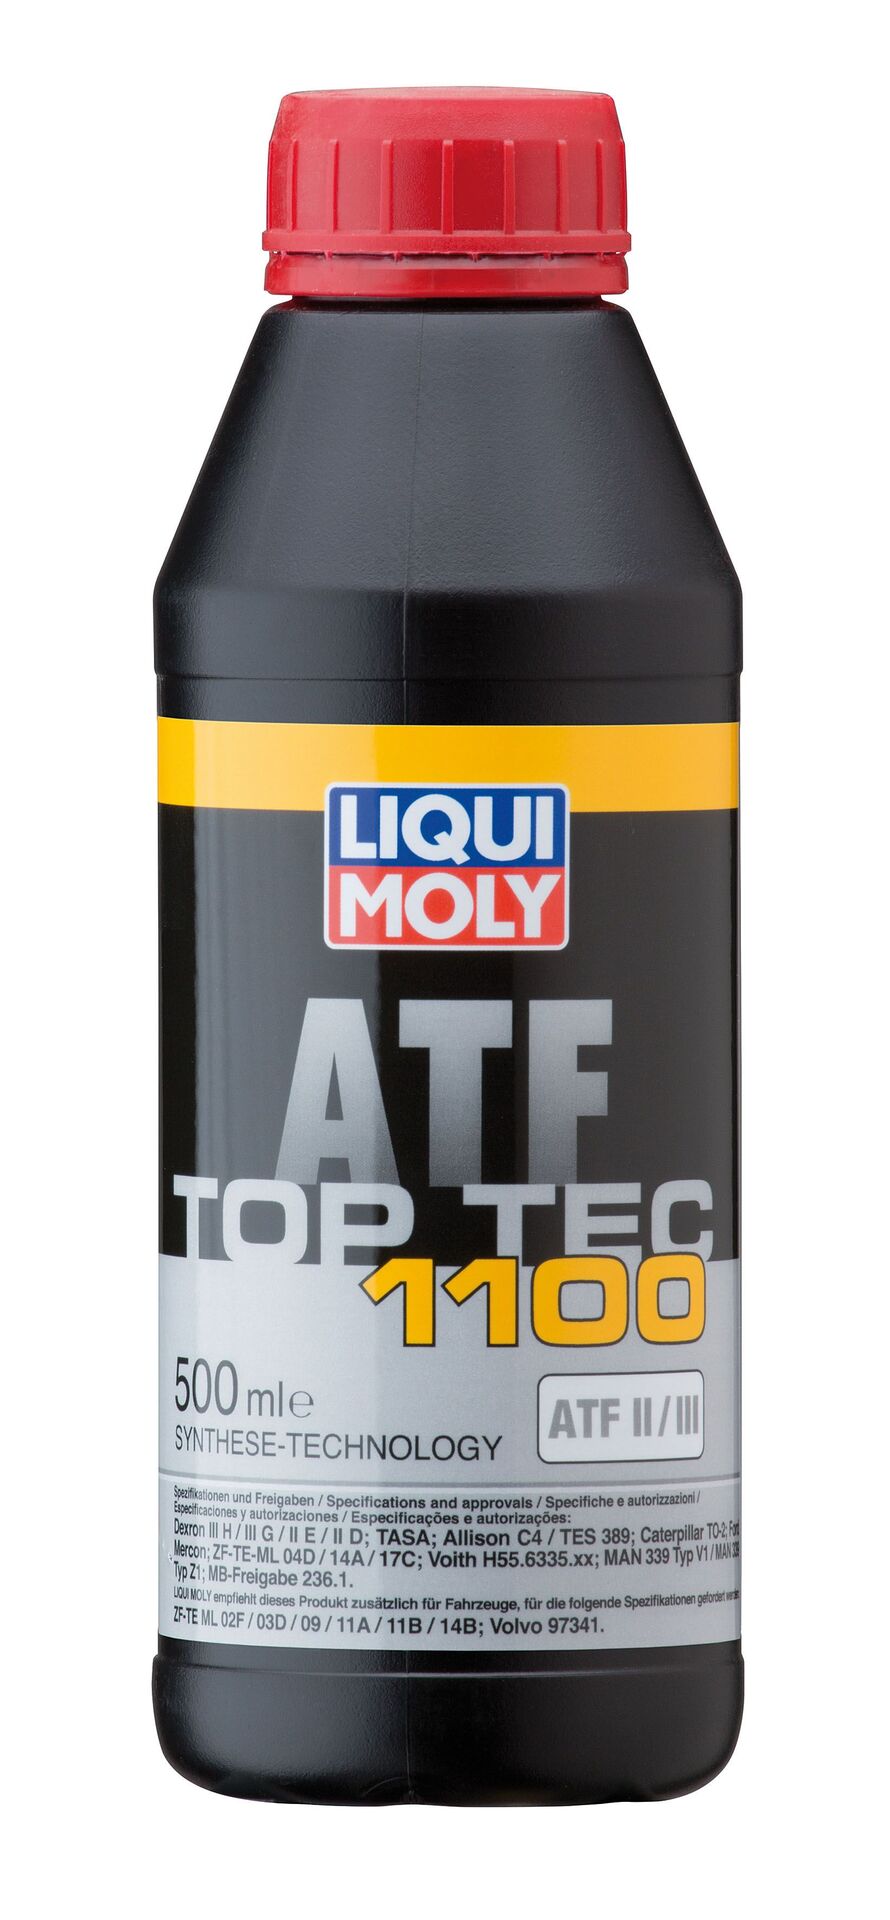 TOP TEC ATF 1100